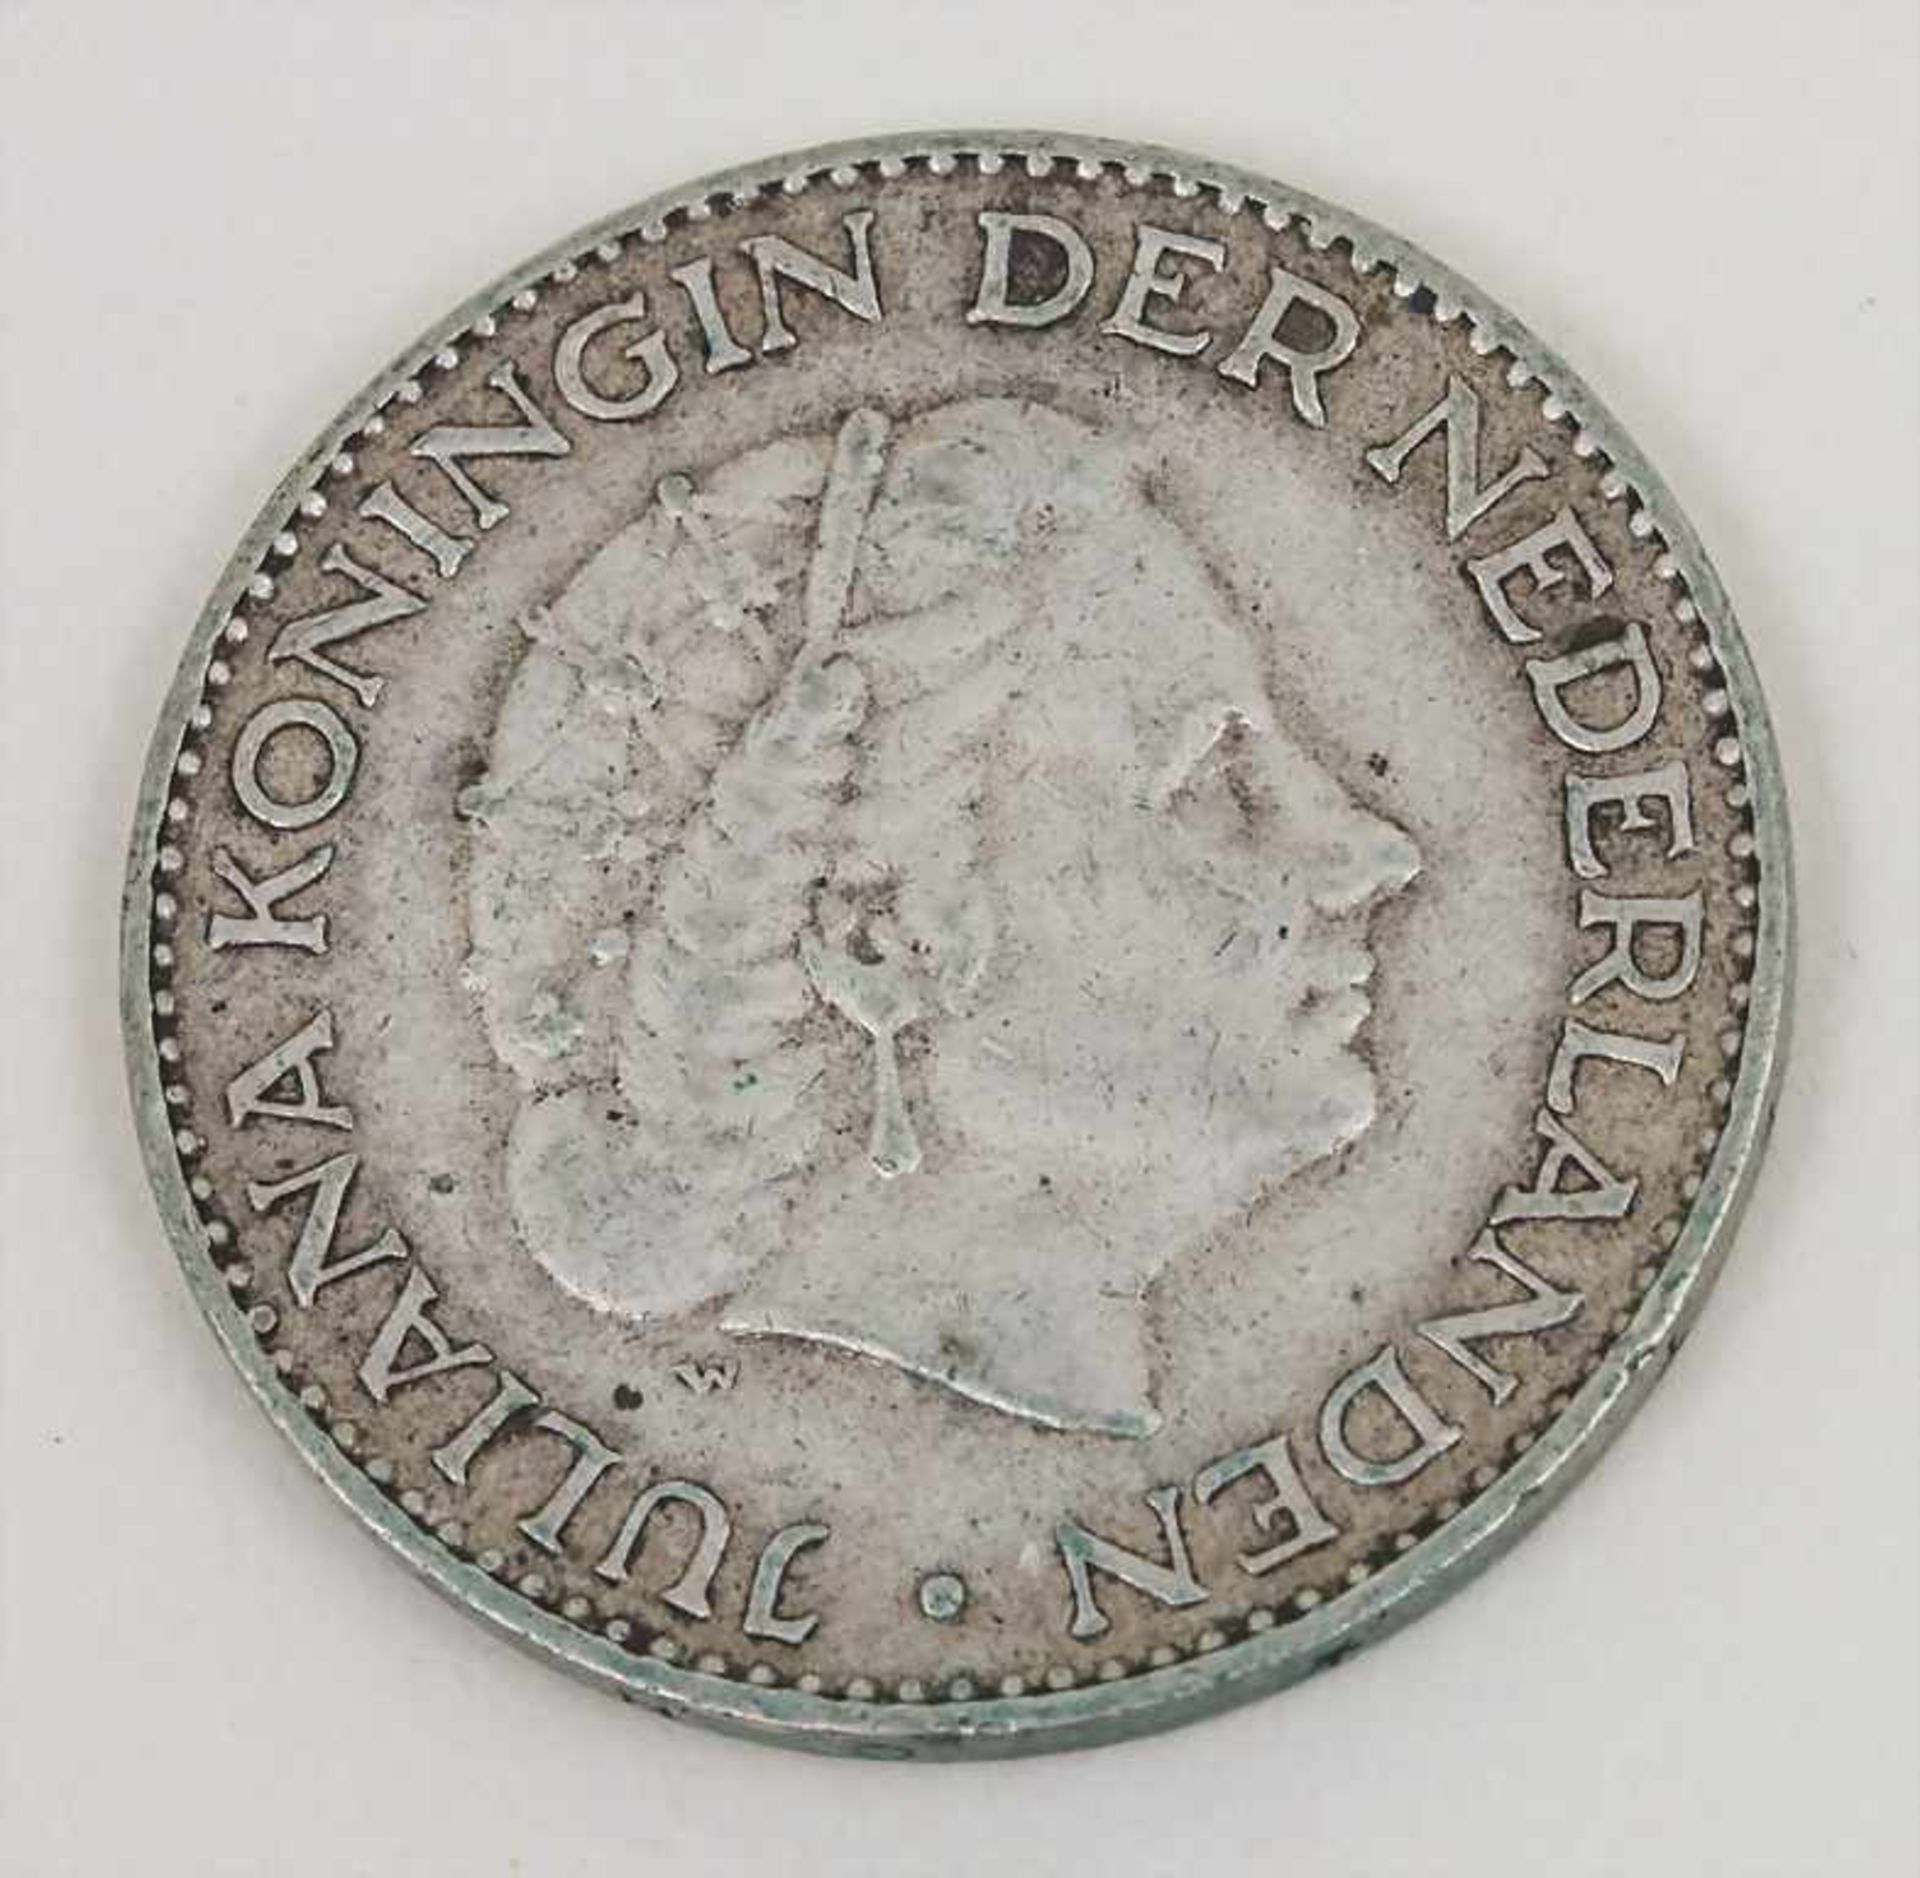 Sammlung 200 1-Gulden Münzen / A collection of 200 1-guilder coins, 1950-1960 Material: Silber, - Bild 2 aus 3